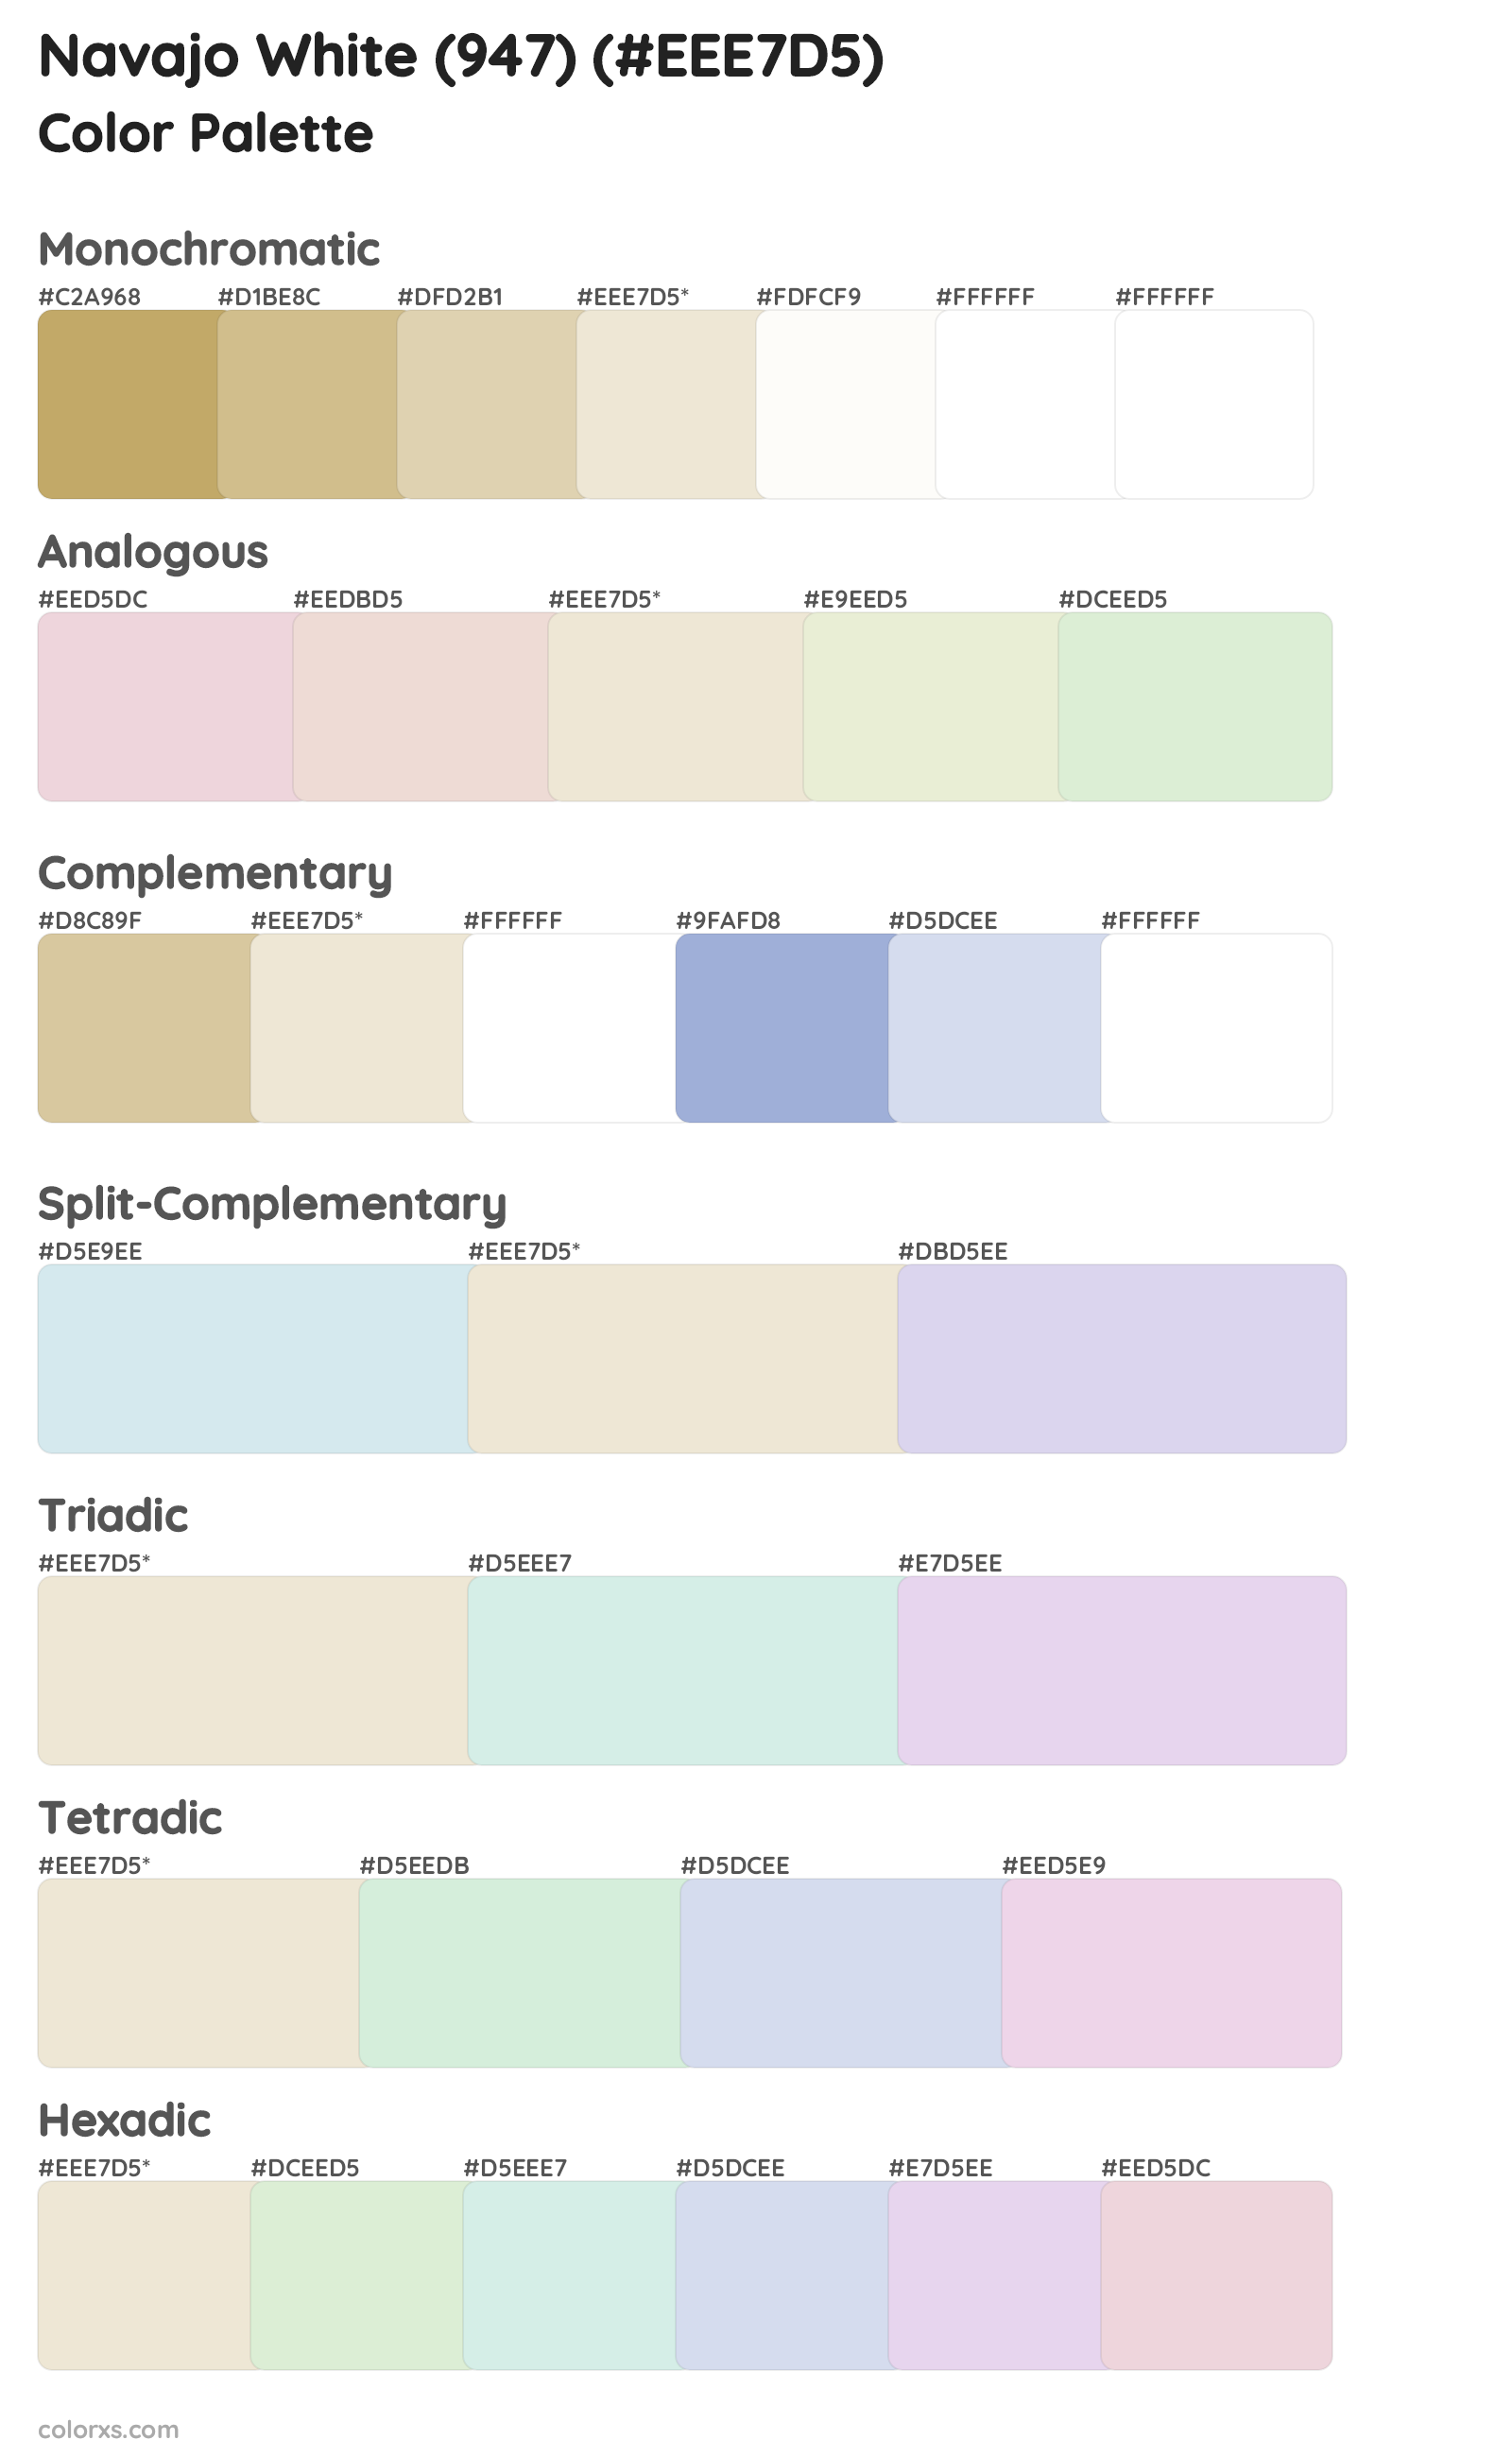 Navajo White (947) Color Scheme Palettes